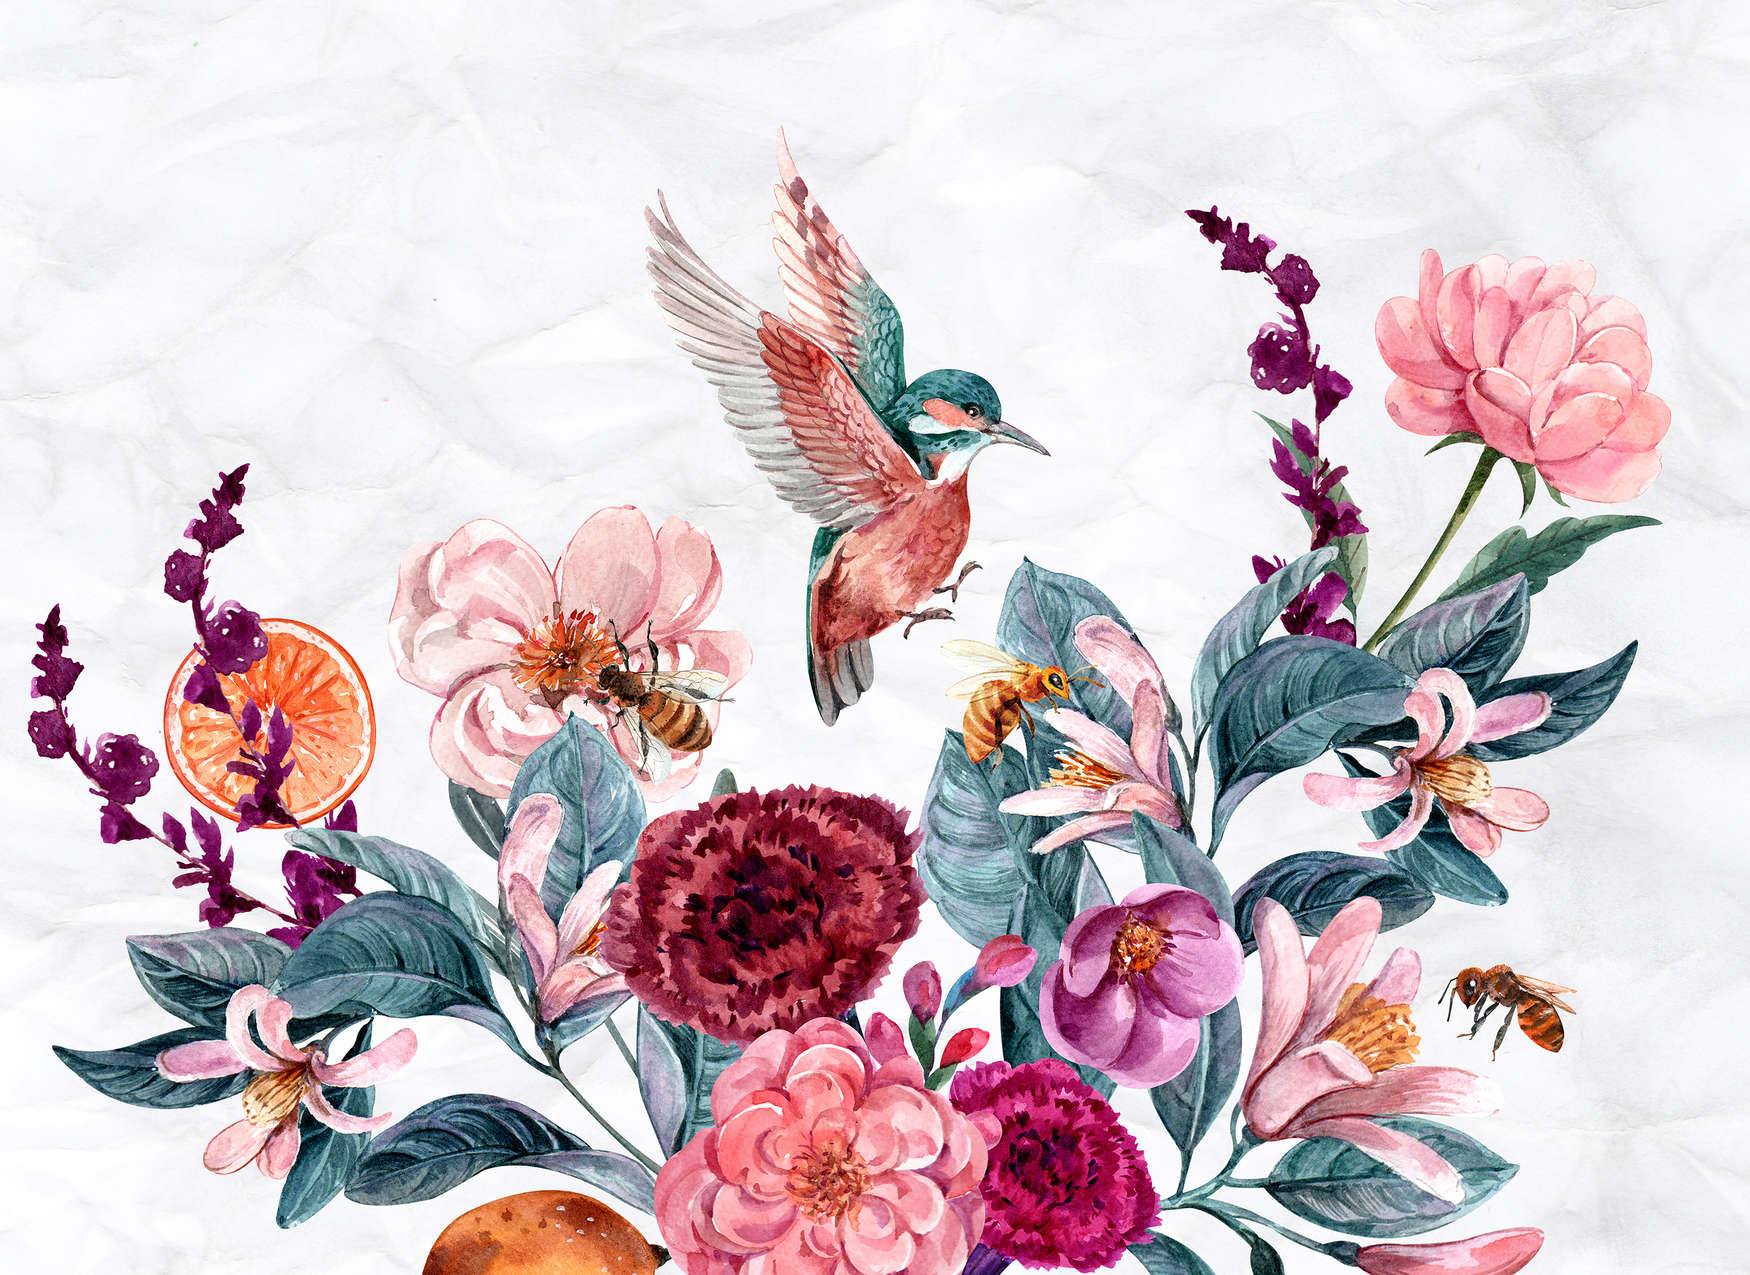             Flowers & Birds Wallpaper on 3D Background - Pink, Green, White
        